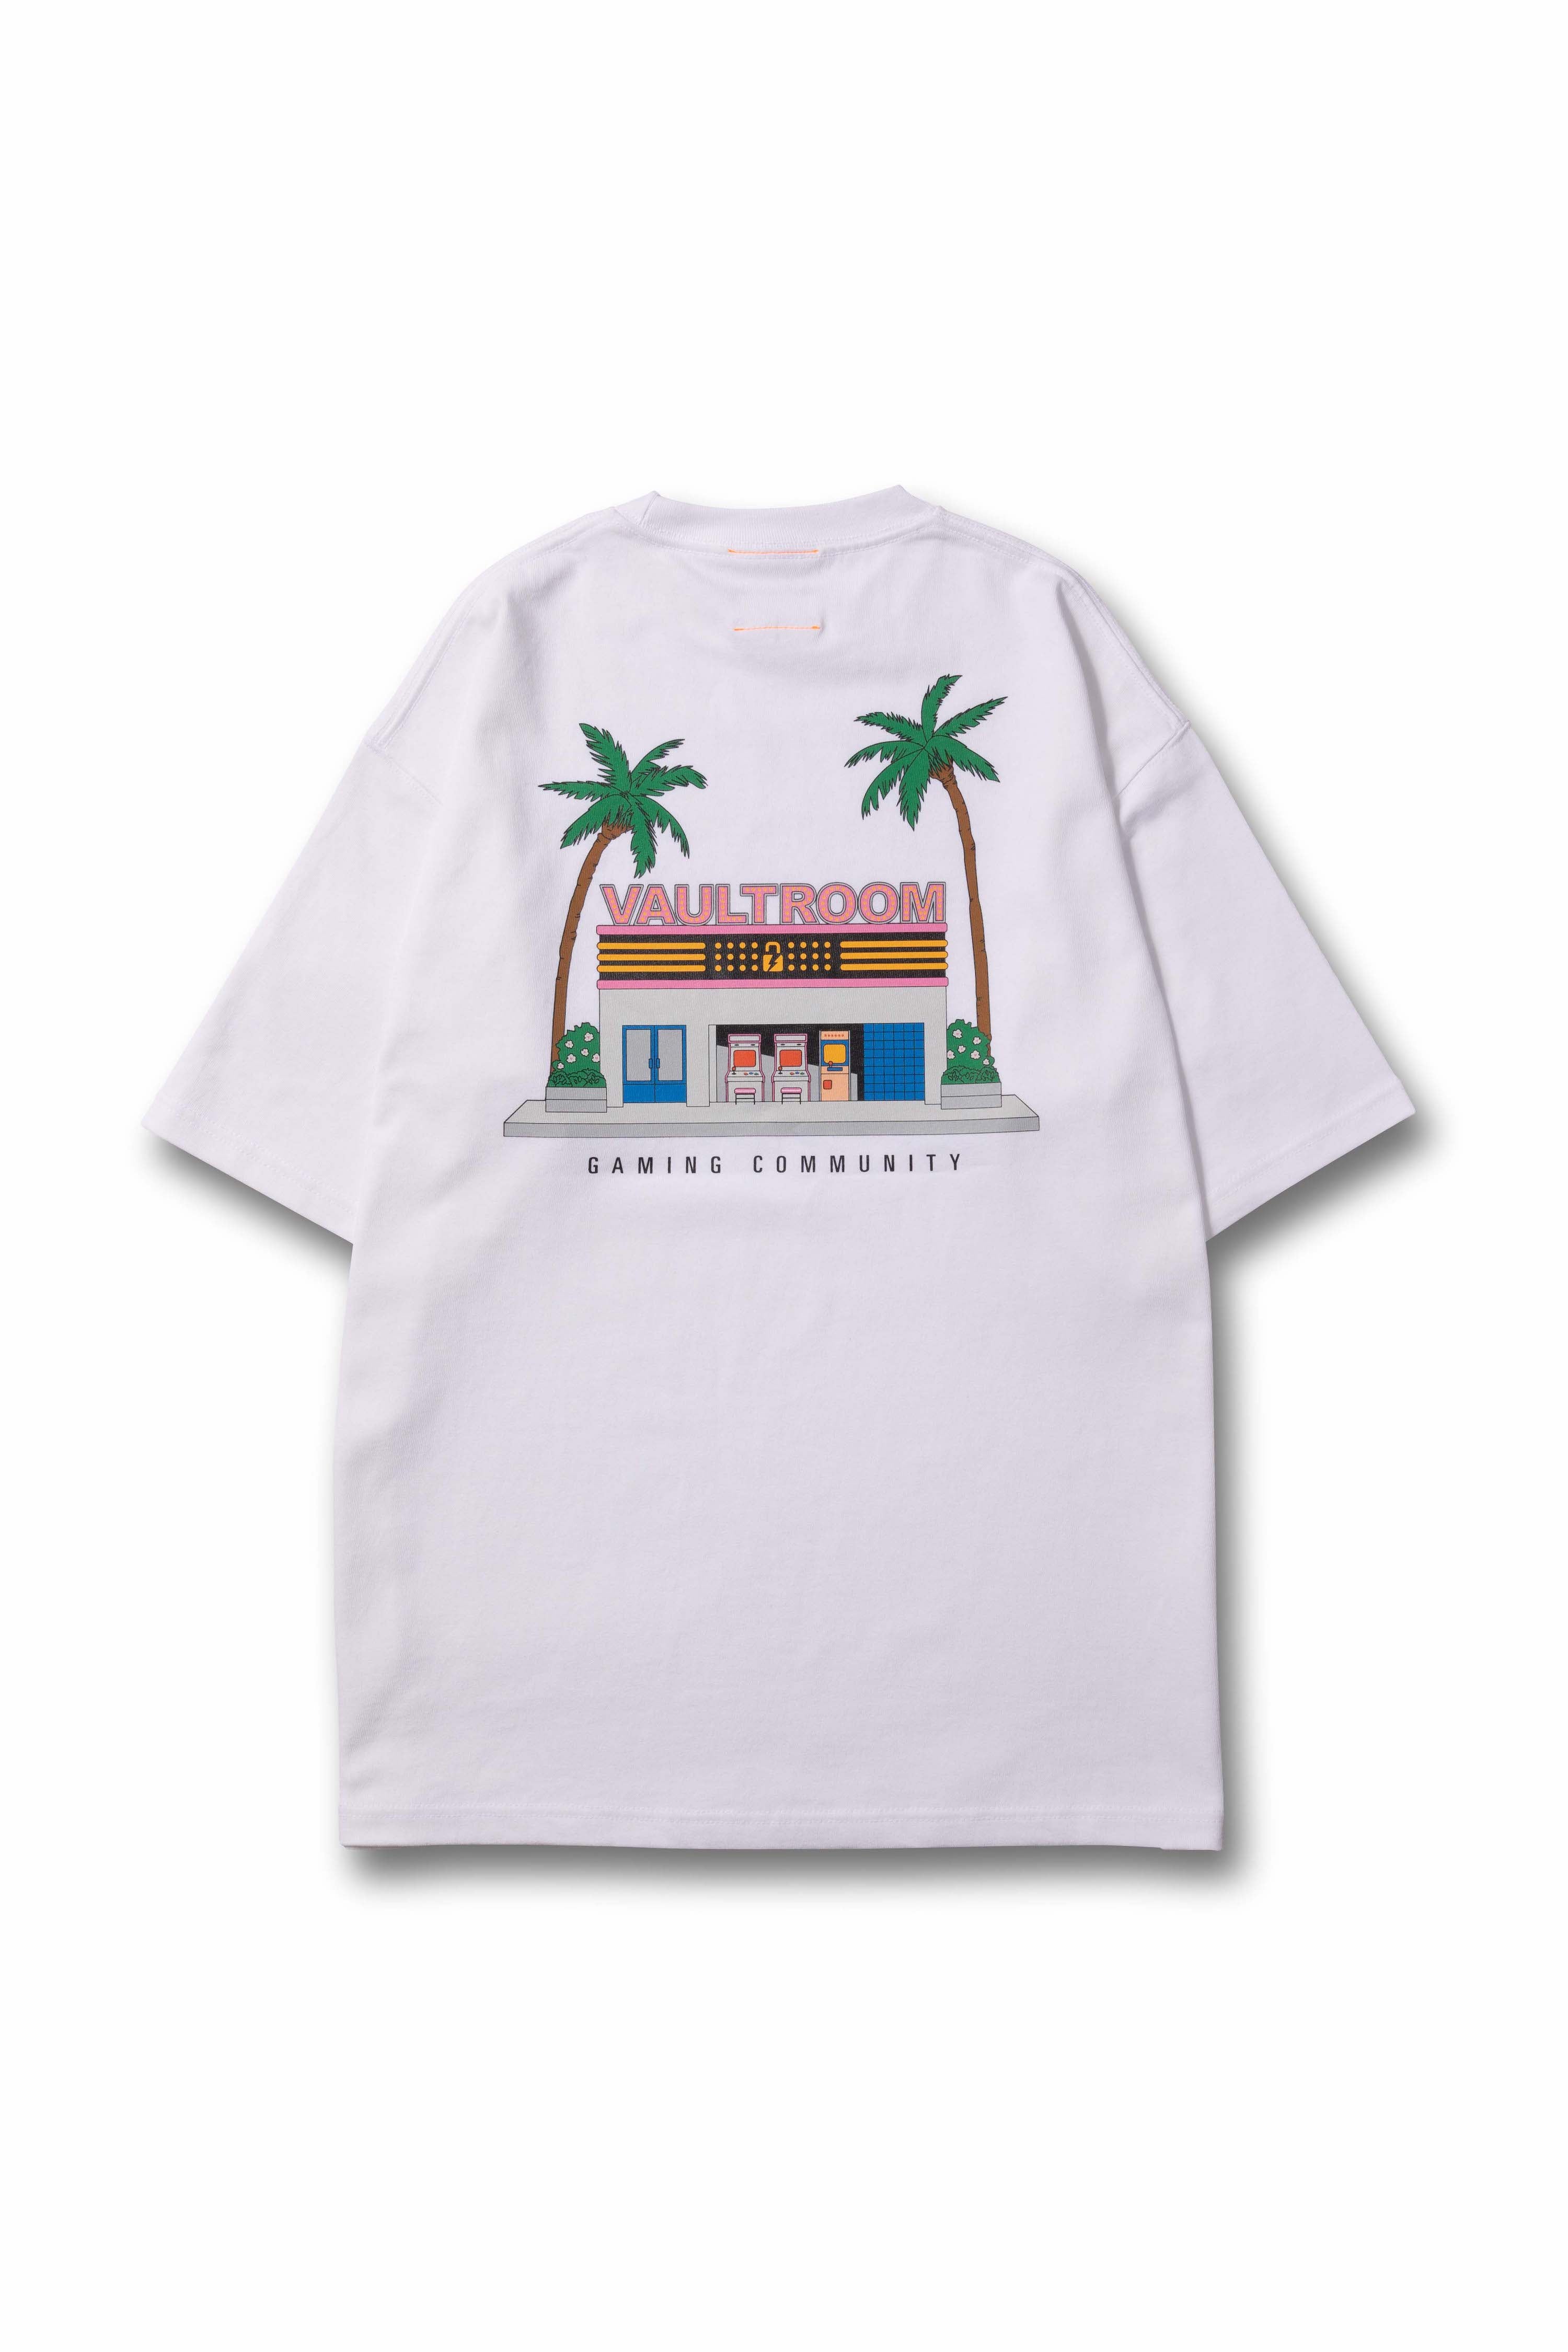 Vaultroom GAME CENTER TEE / WHT XL - Tシャツ/カットソー(半袖/袖なし)